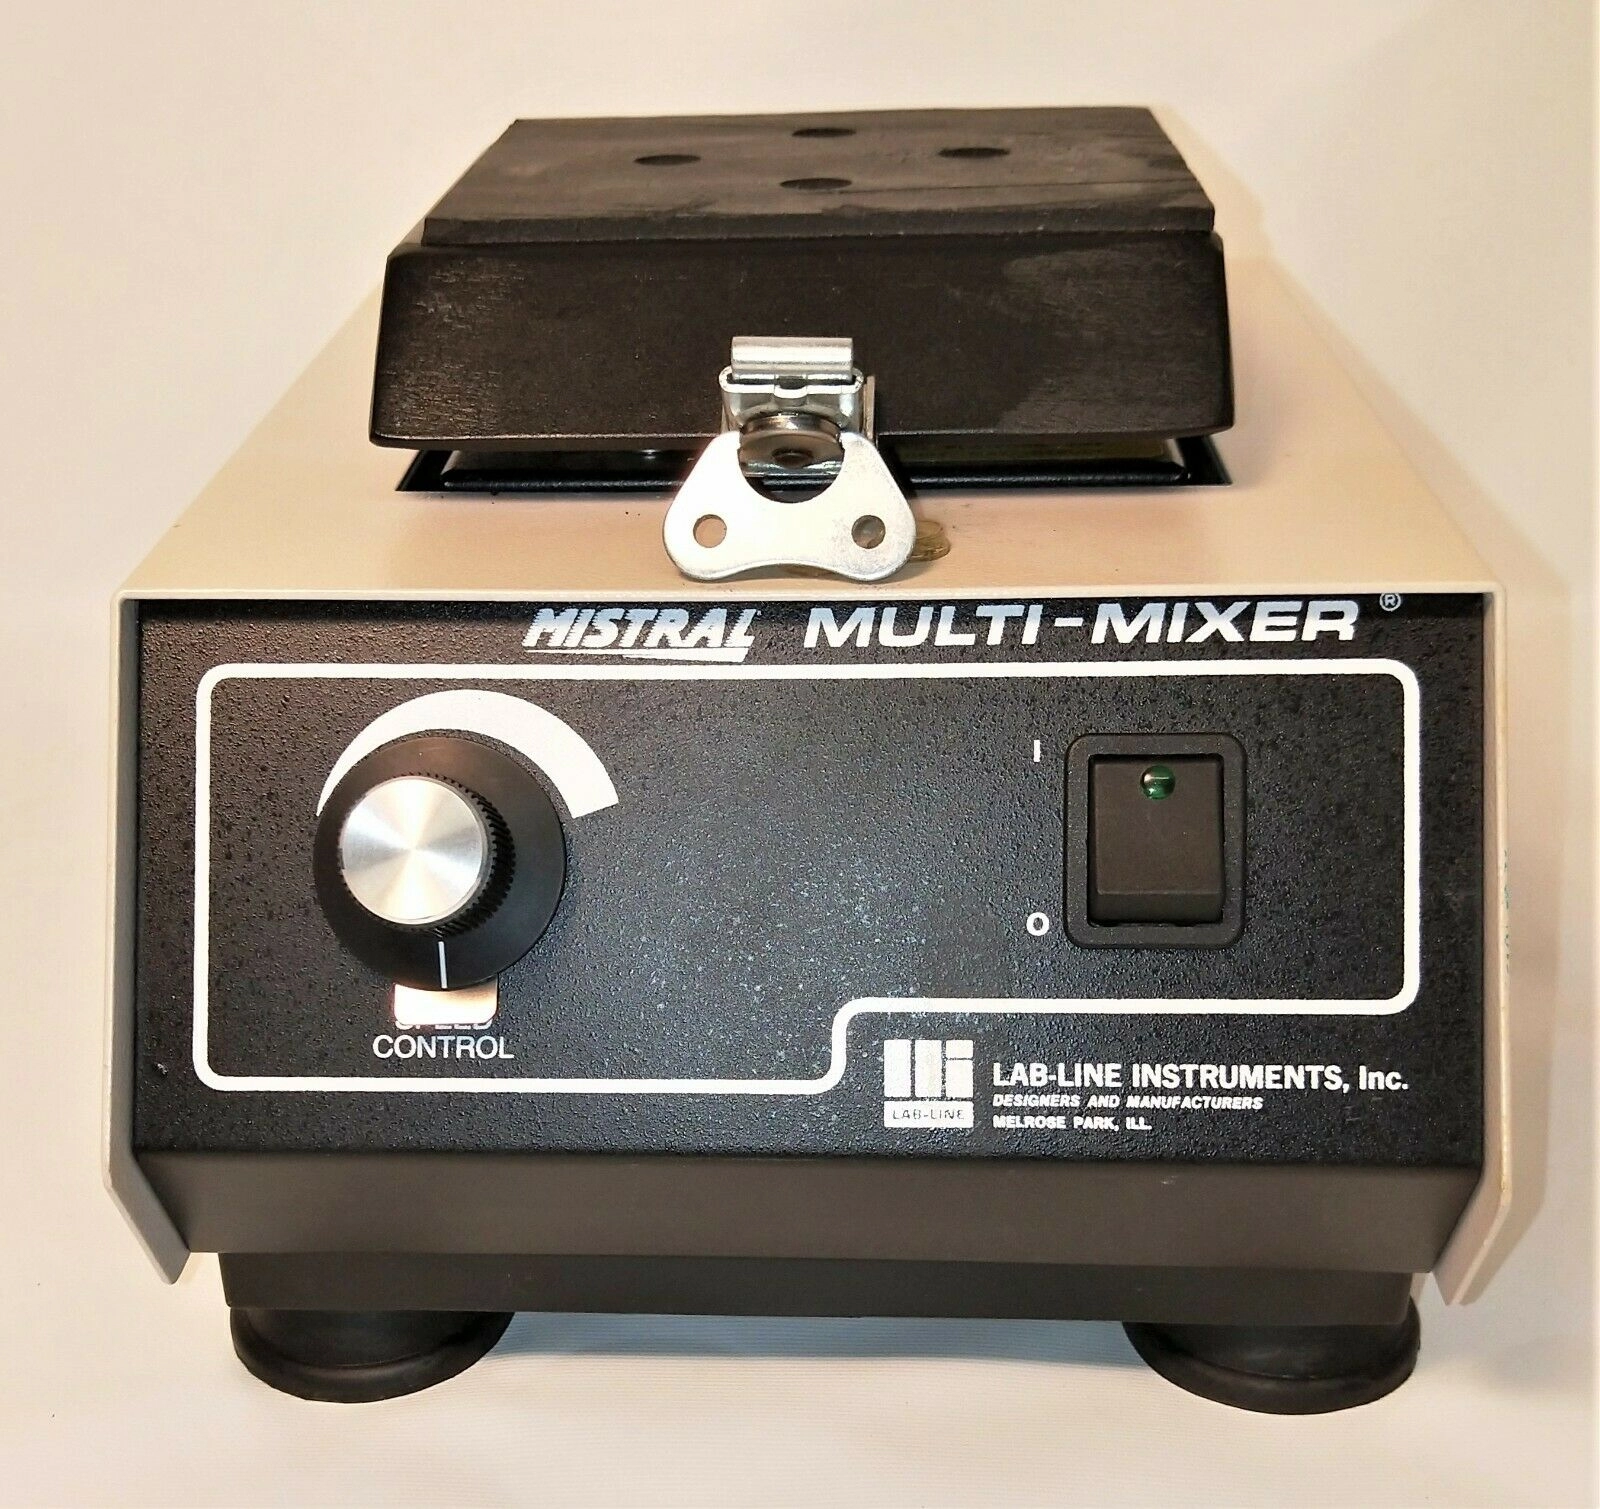 Lab-Line Mistral Multi-Mixer 4600 Vortex Mixer